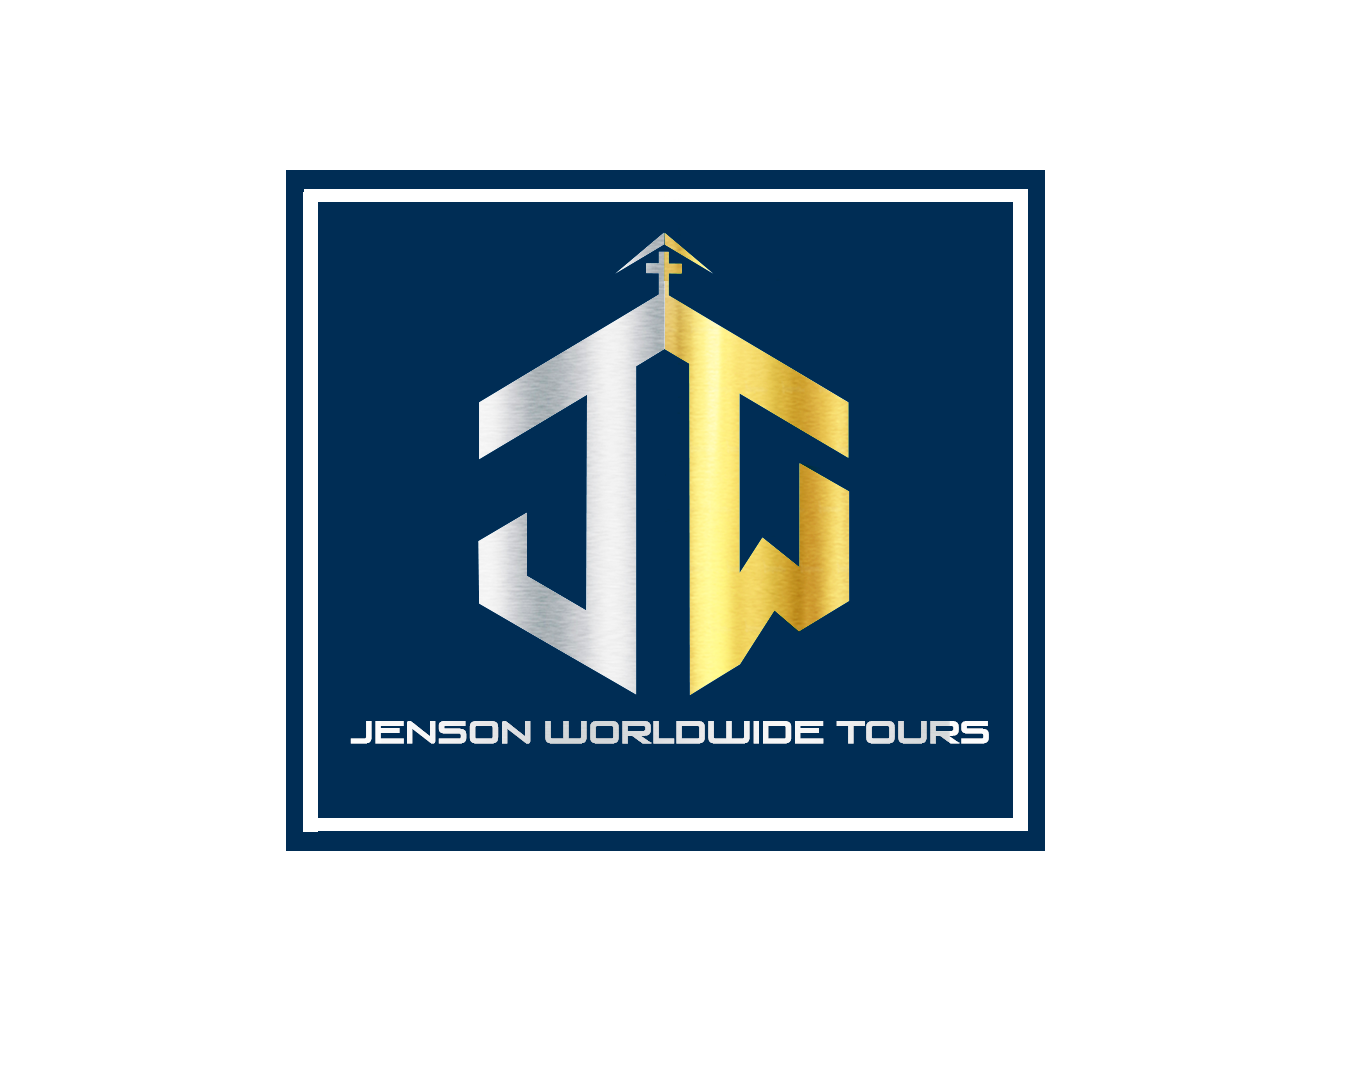 Jenson Worldwide Tours